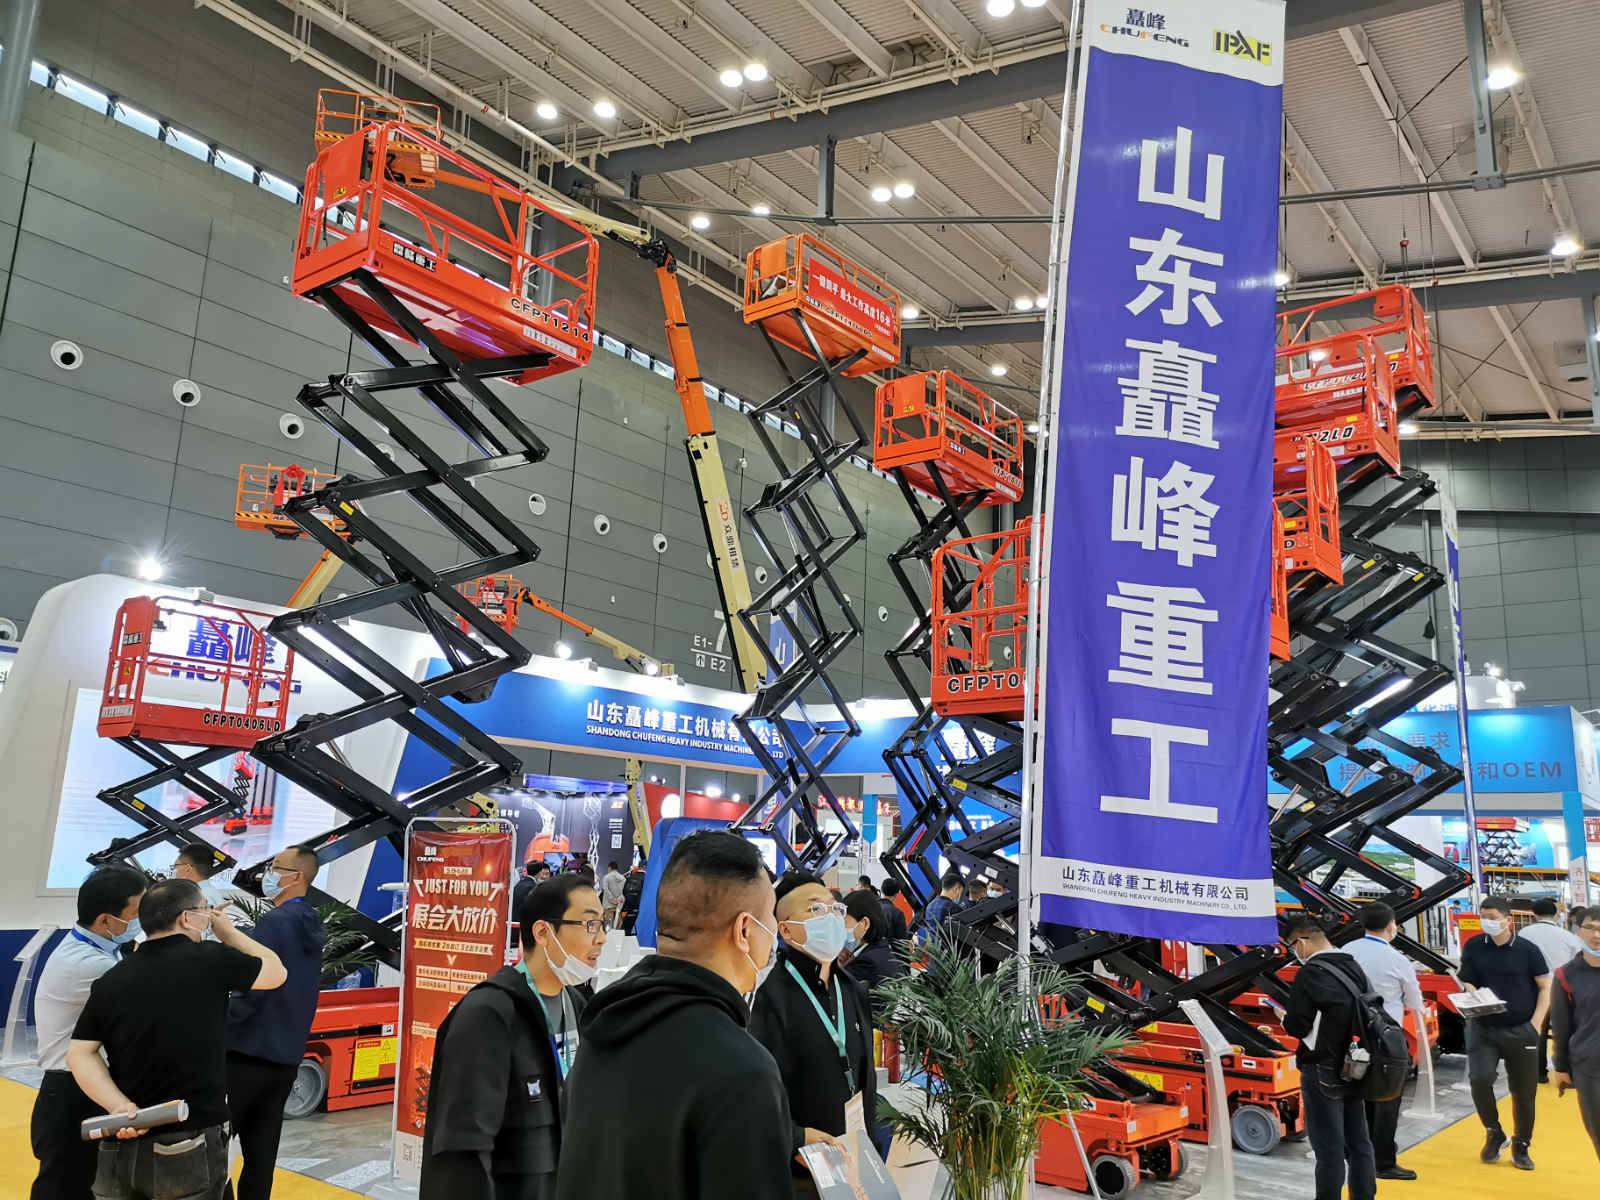 2021 Changsha Internasionale Konstruksie Masjinerie-uitstalling open op 19 Mei